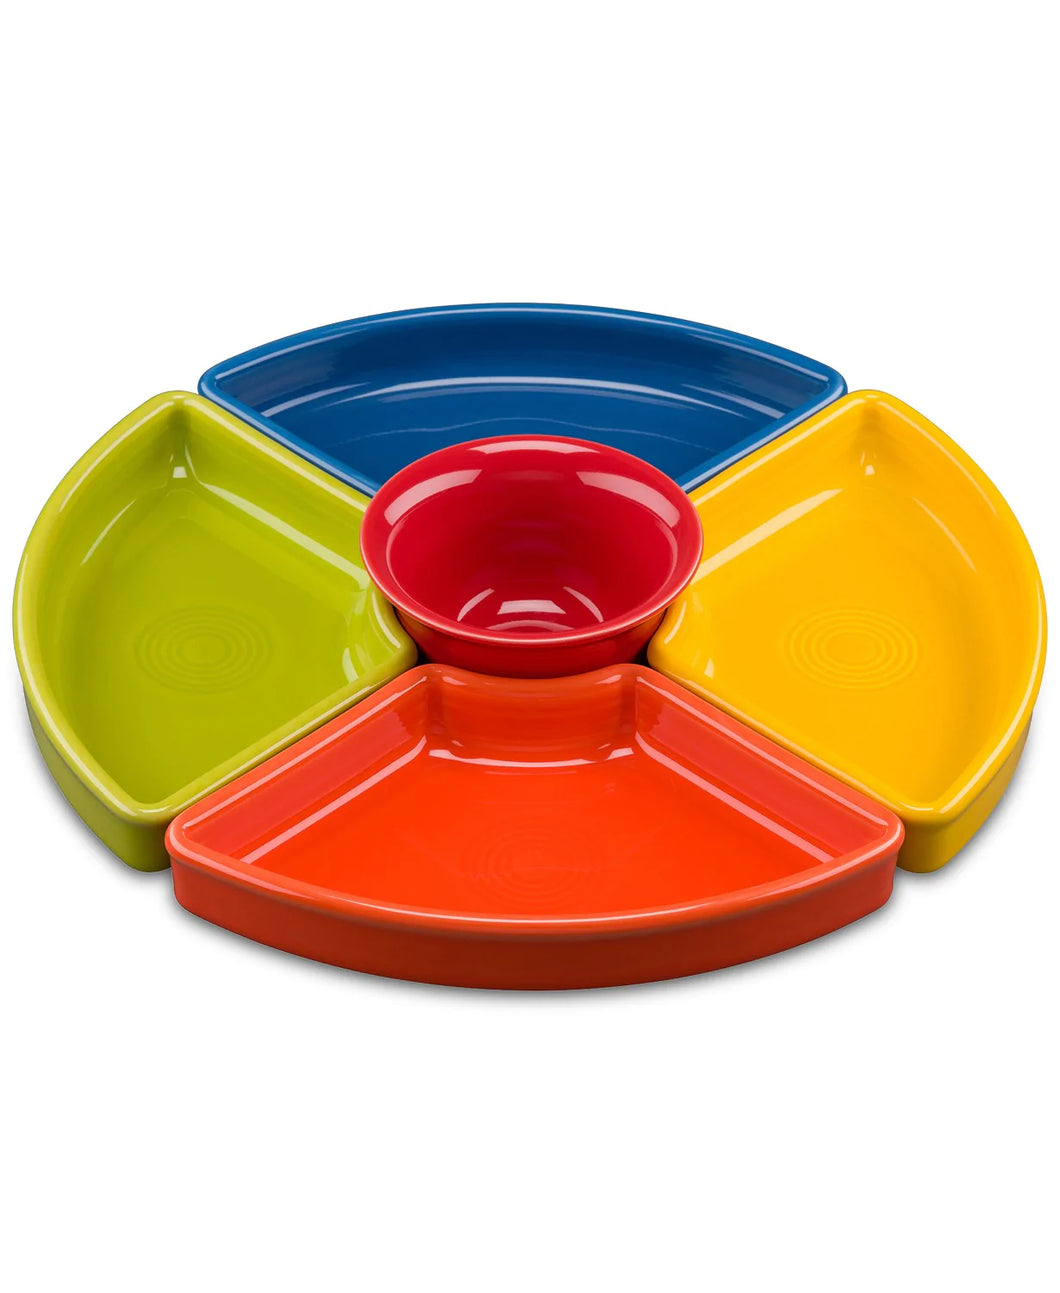 Fiestaware - Five Piece Entertaining Set, Bold Colors